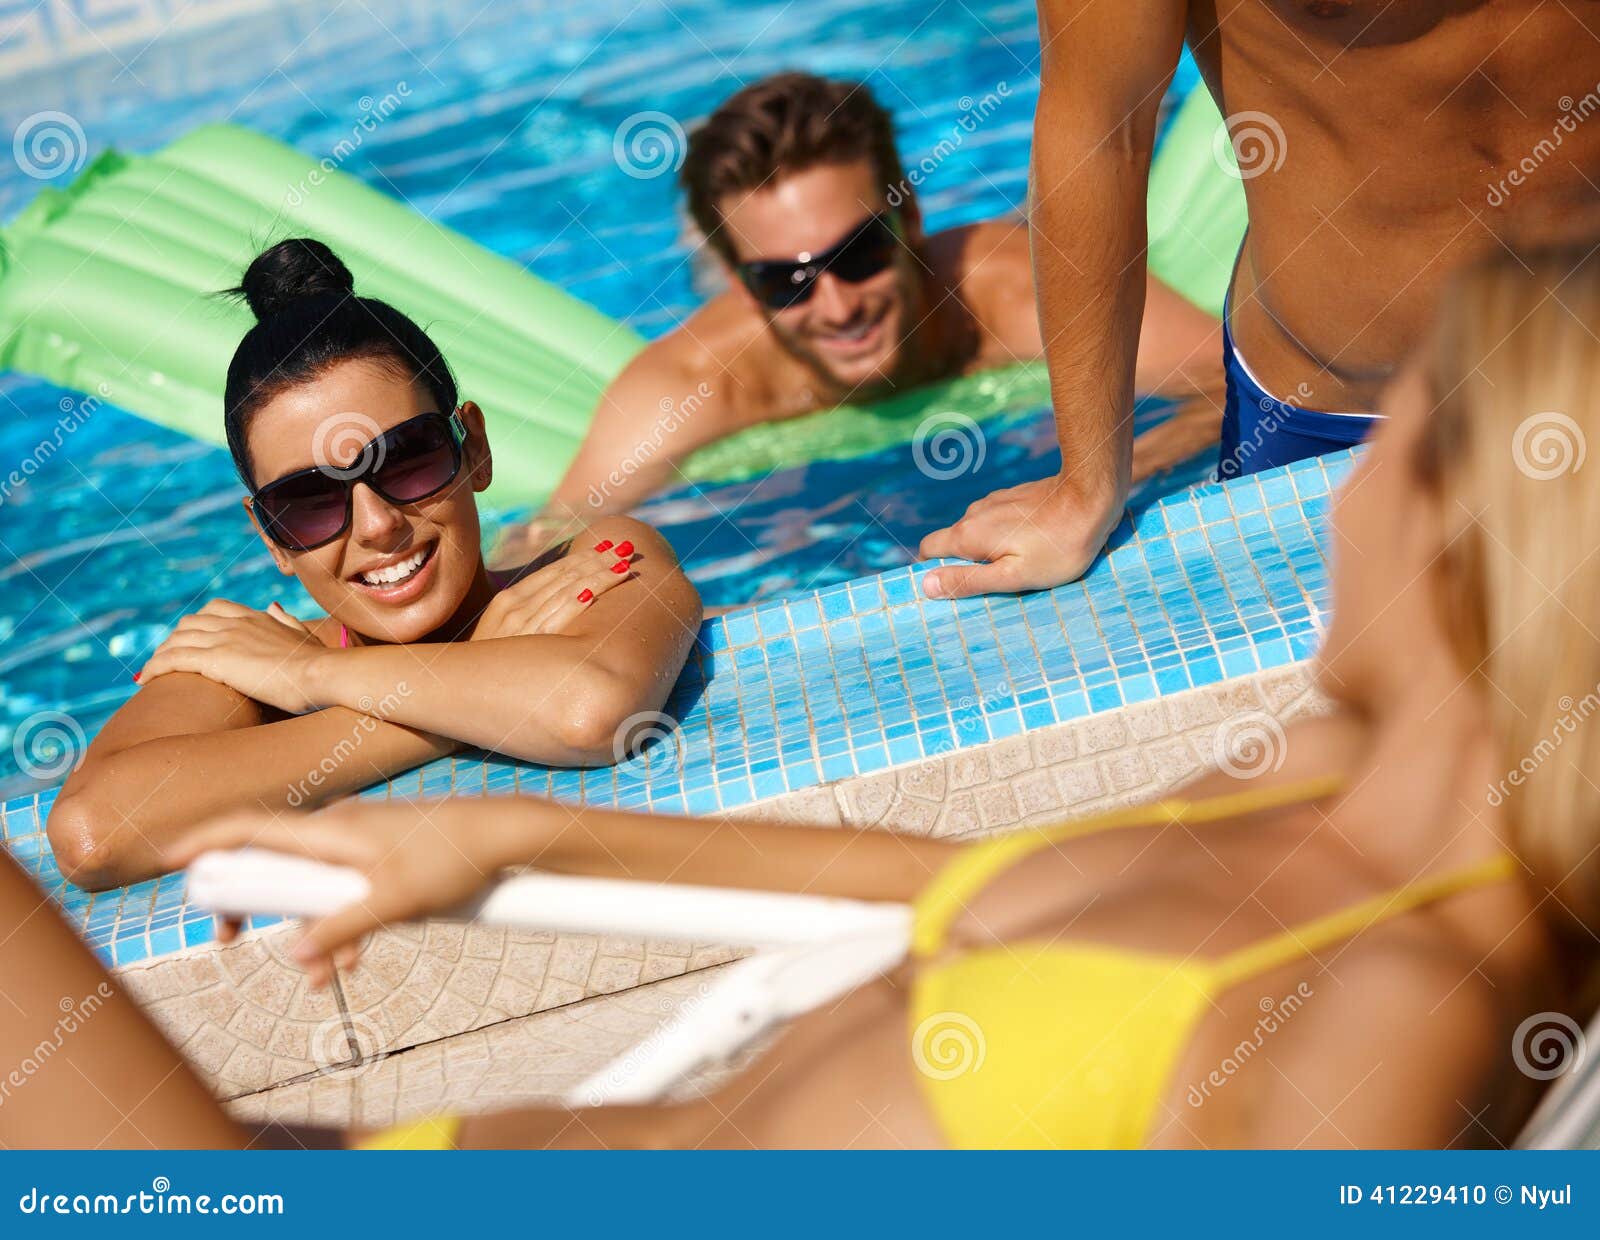 happy companionship in swimming pool